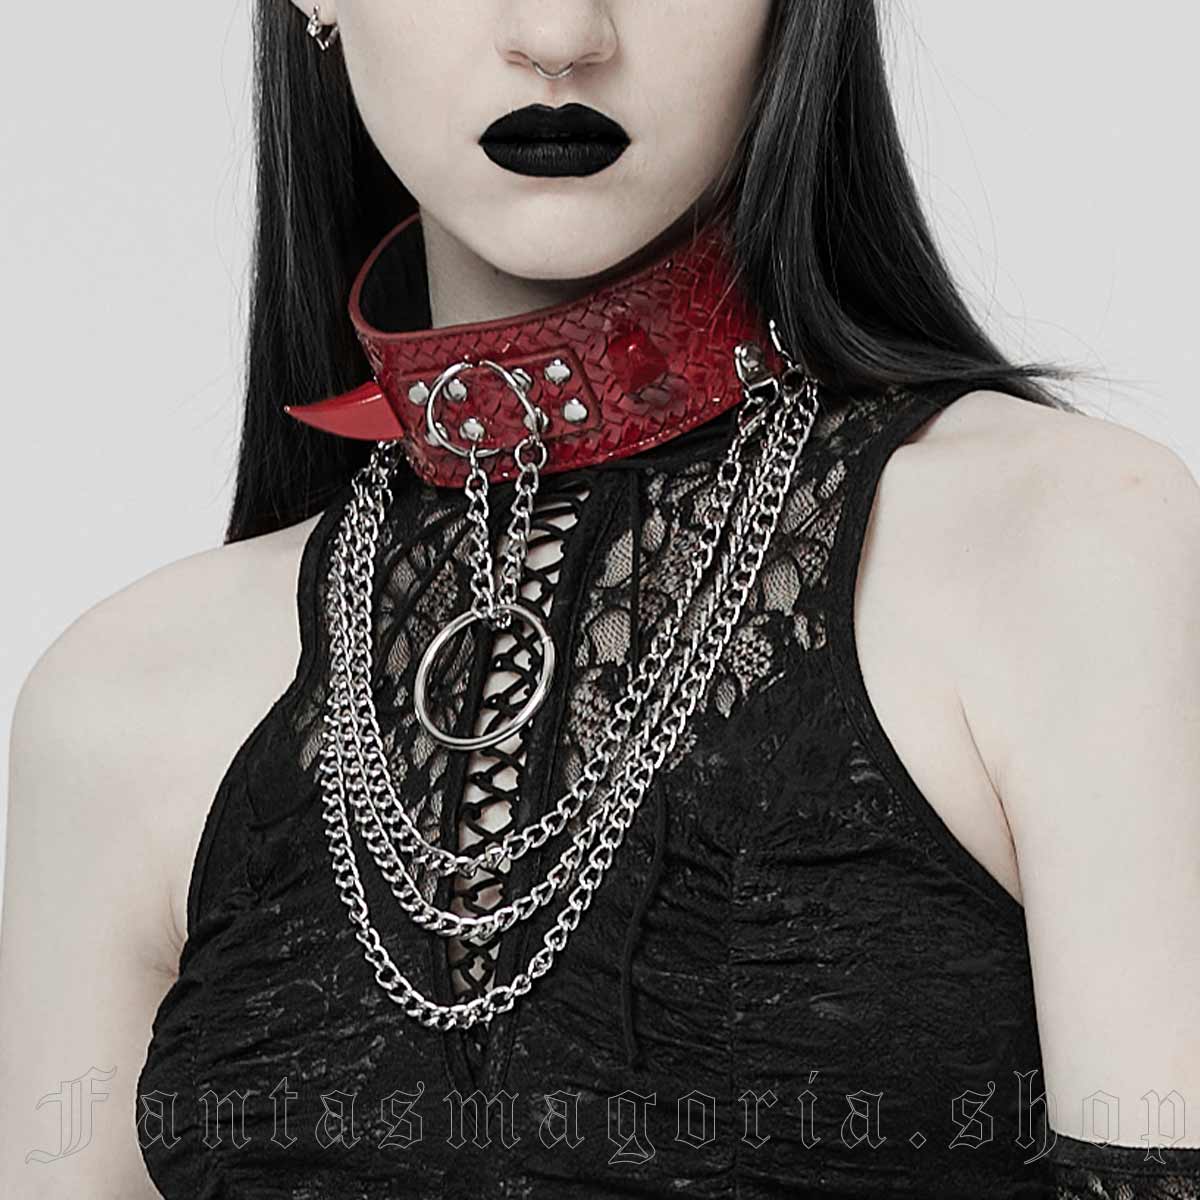 Black O Ring Sexy Choker Fetish Collar Punk Gothic Goth Rave Necklace